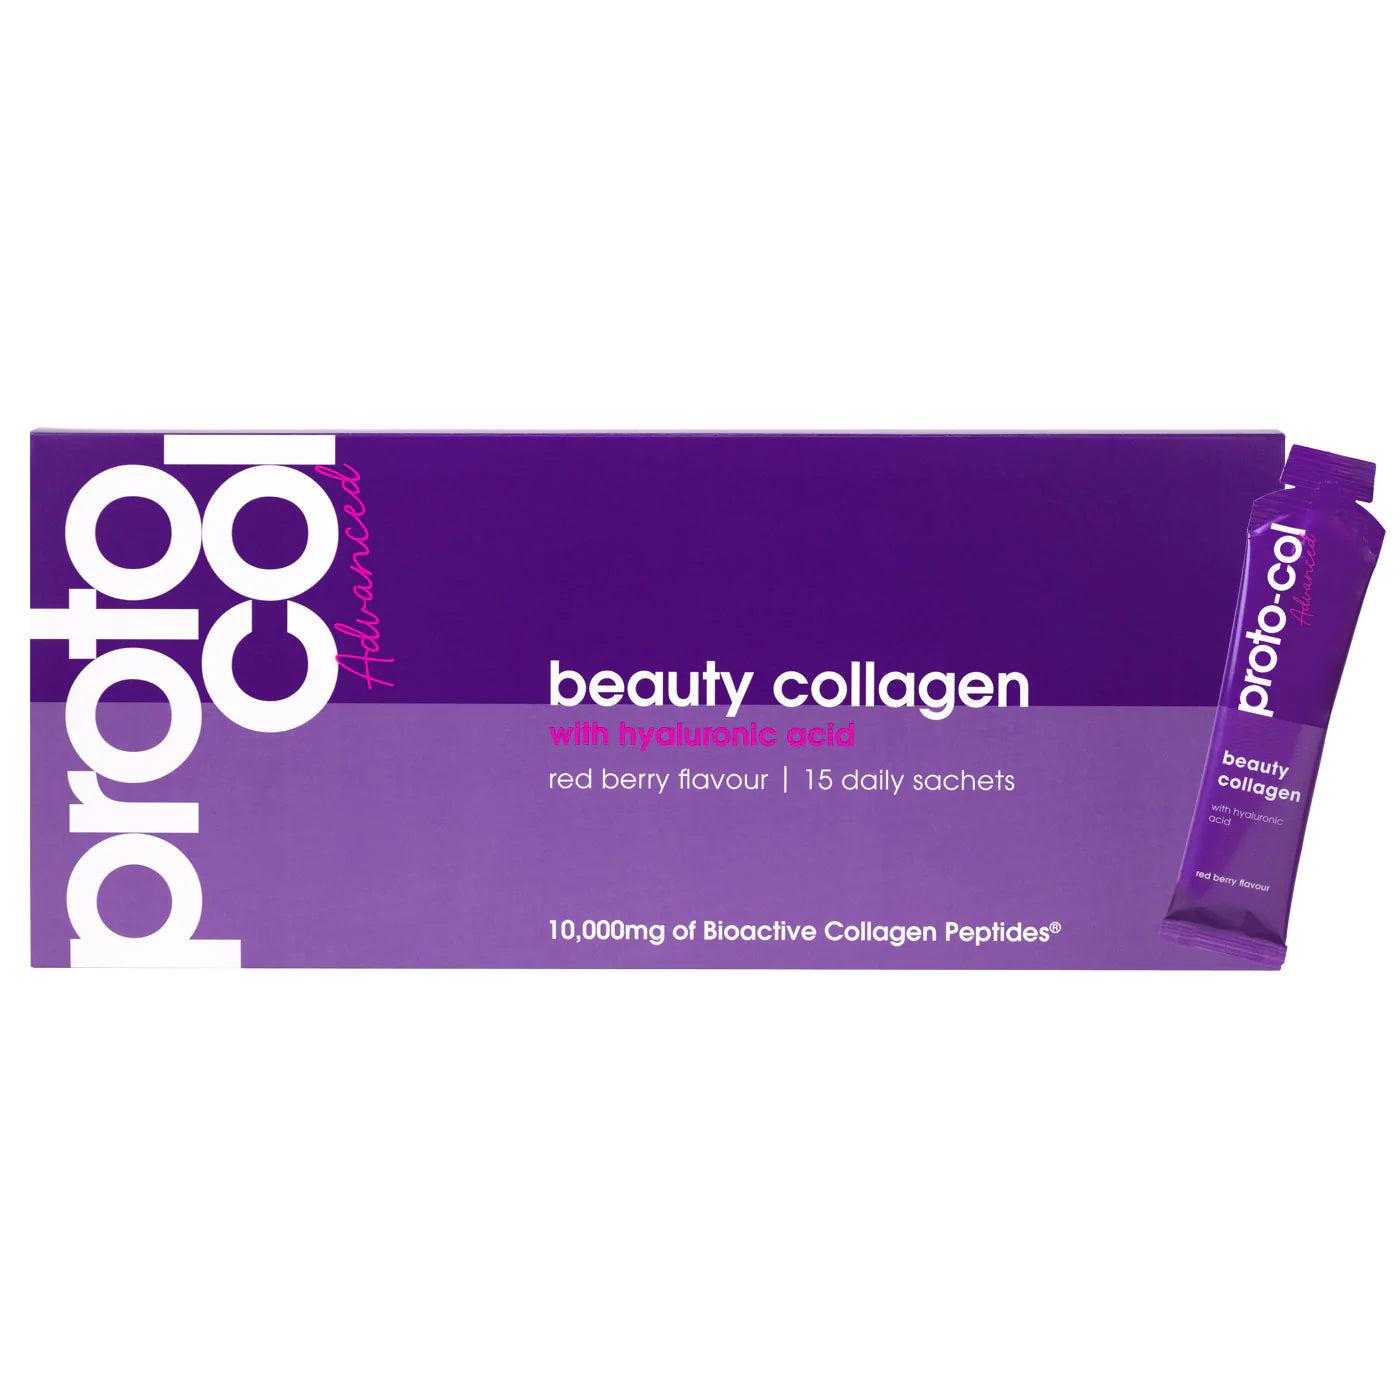 beauty-collagen